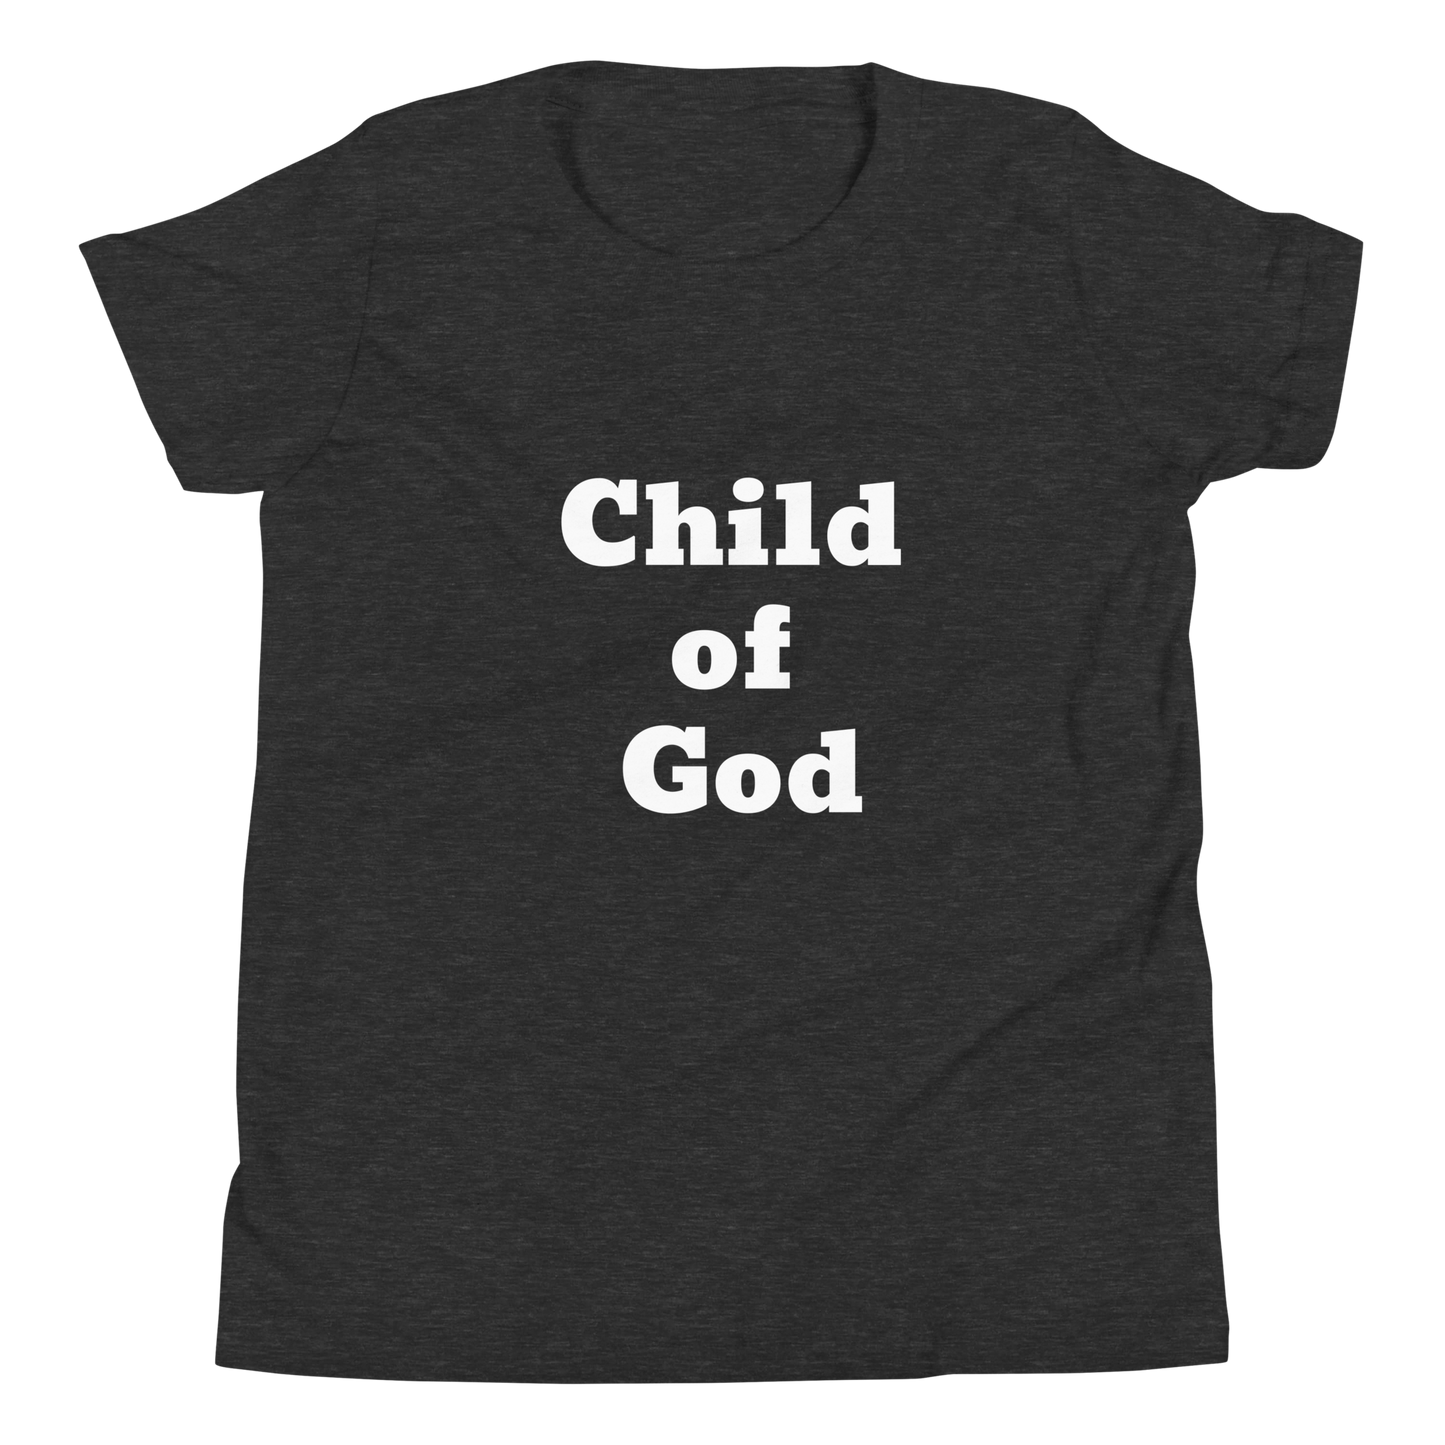 Child of God - Kids Tee